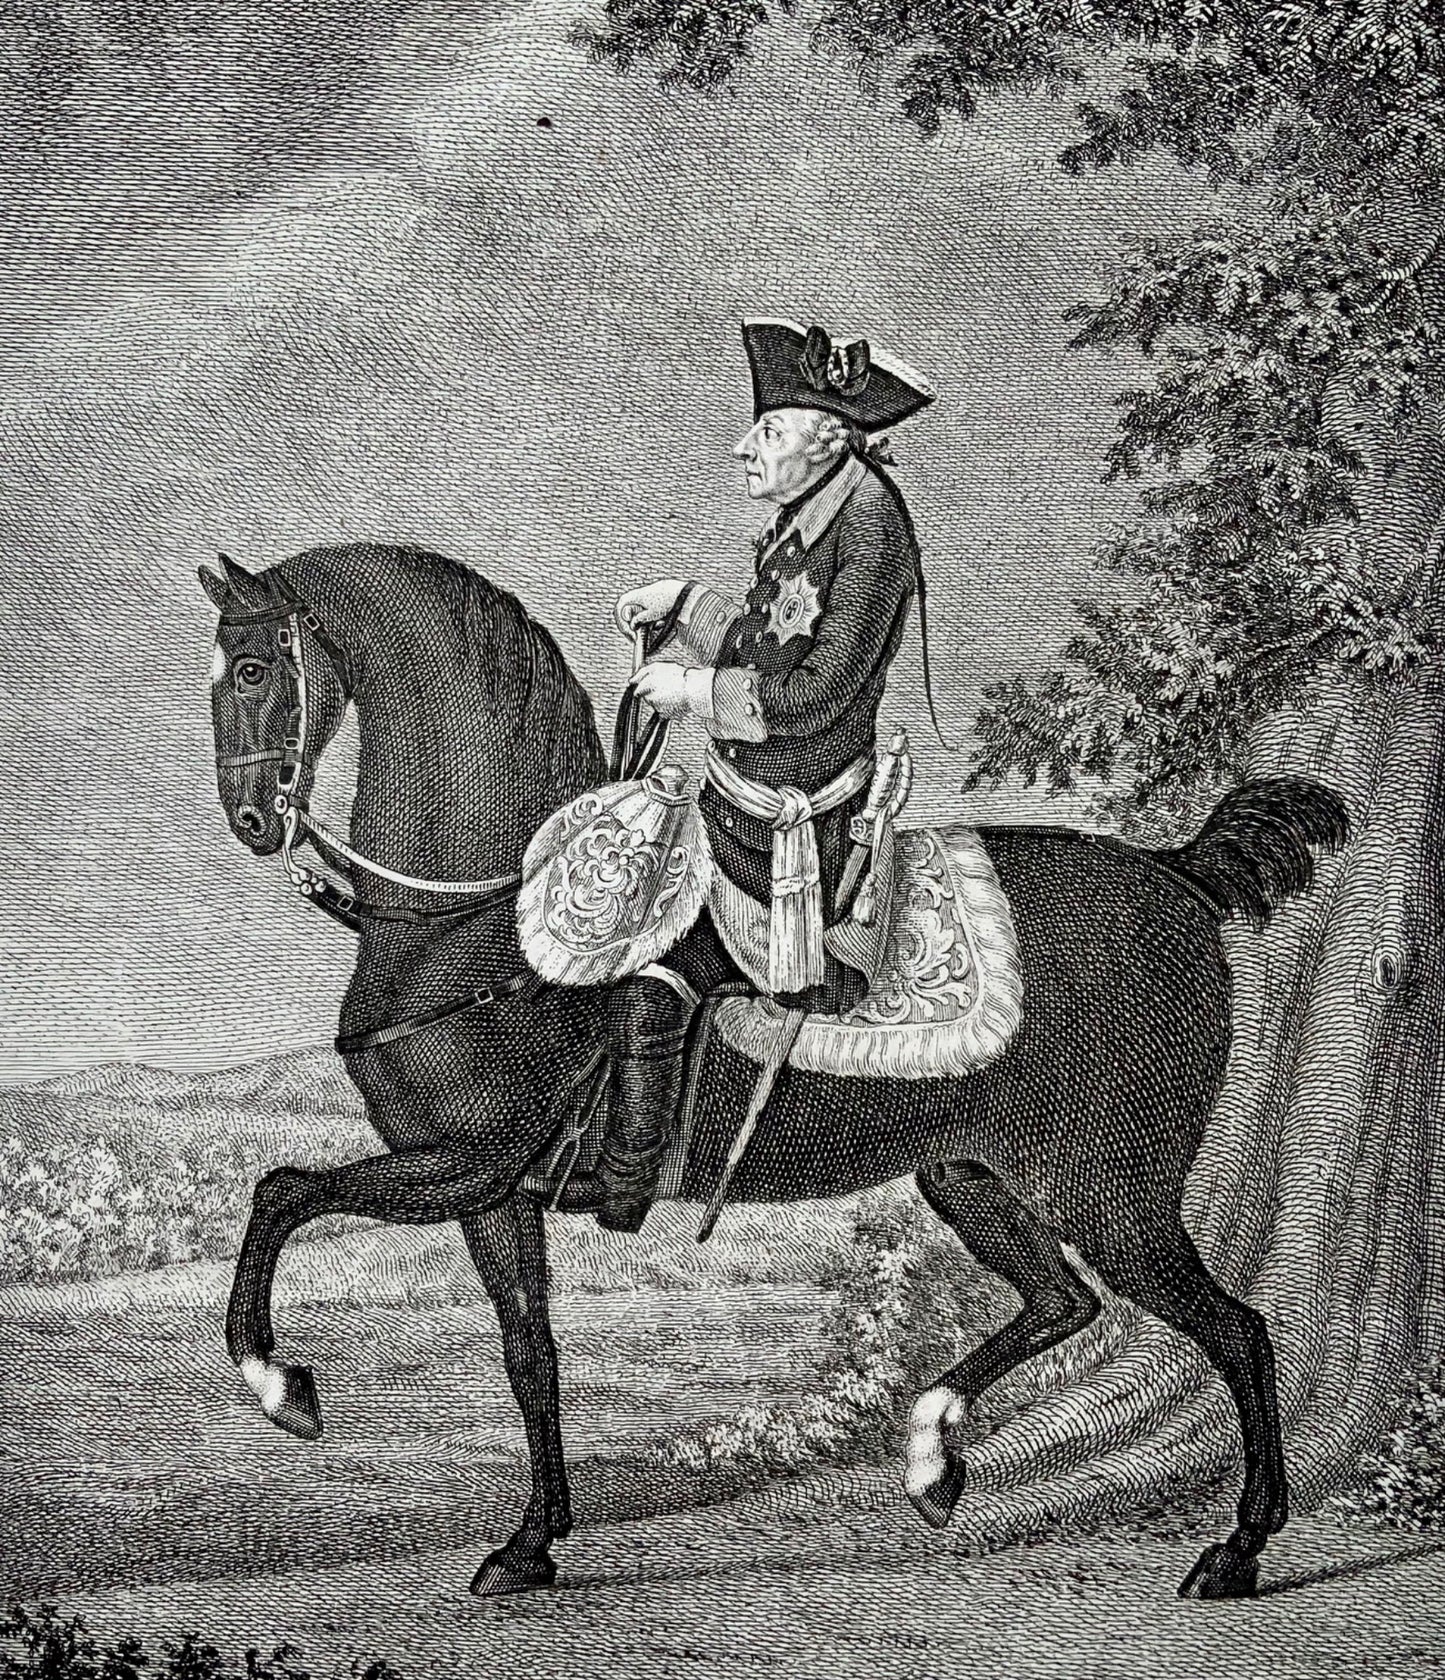 1788 Frederic the Great on Horseback [Lips after Chodowicki], Folio, portrait